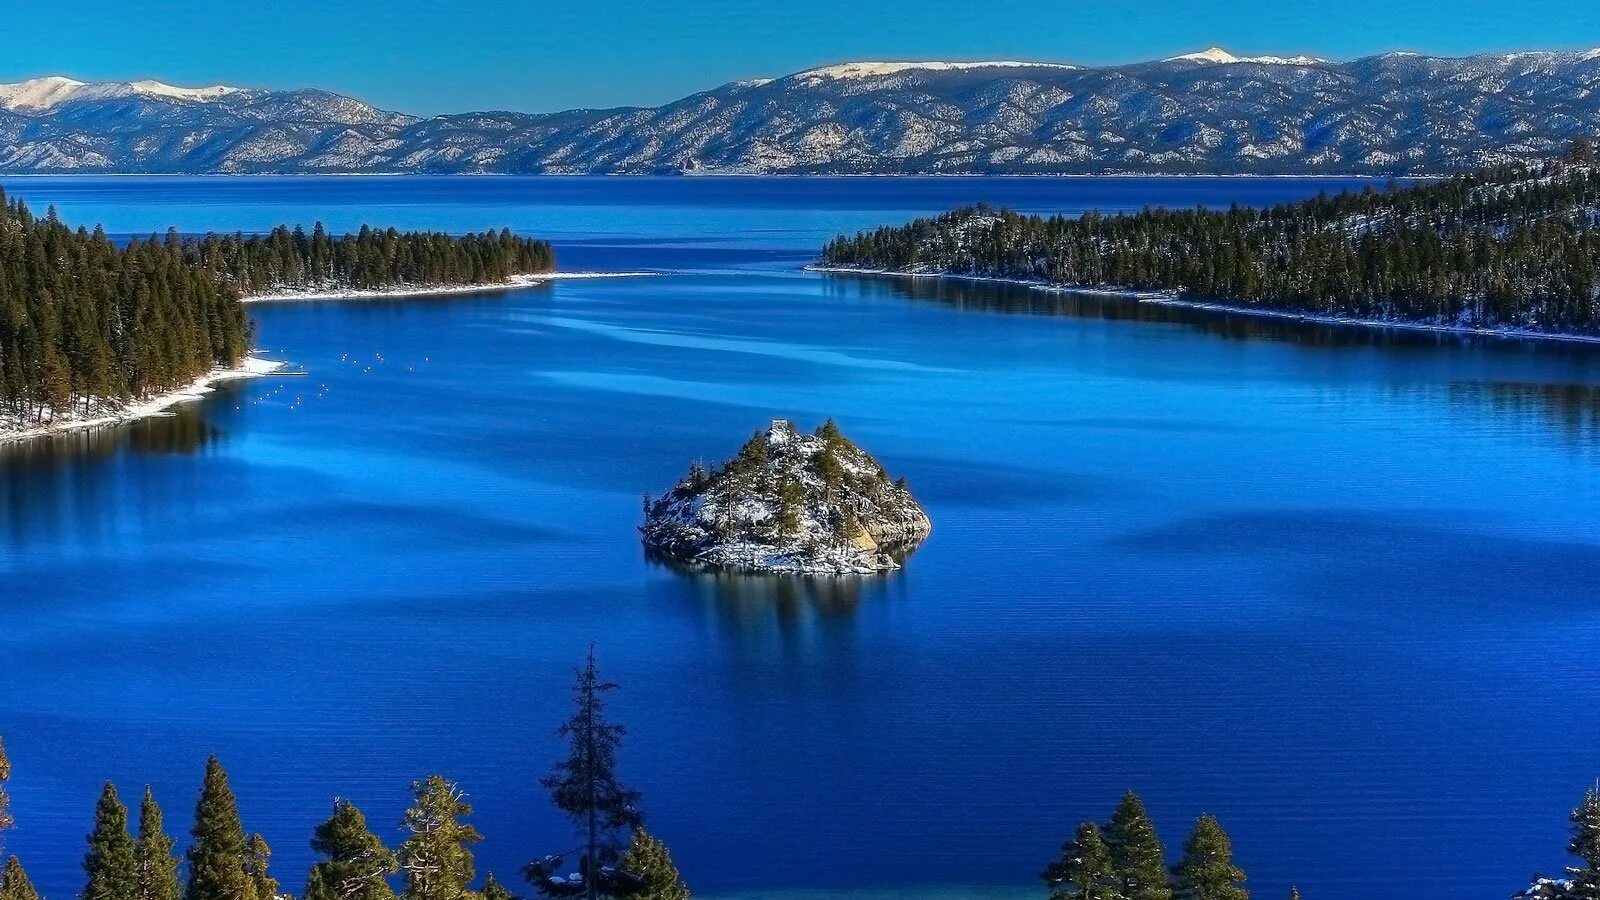 Озеро Тахо Северная Америка. Колорадо озеро Тахо. Озеро Тахо Калифорния. Озеро Тахо, Невада, США. Озеро на севере южной америки